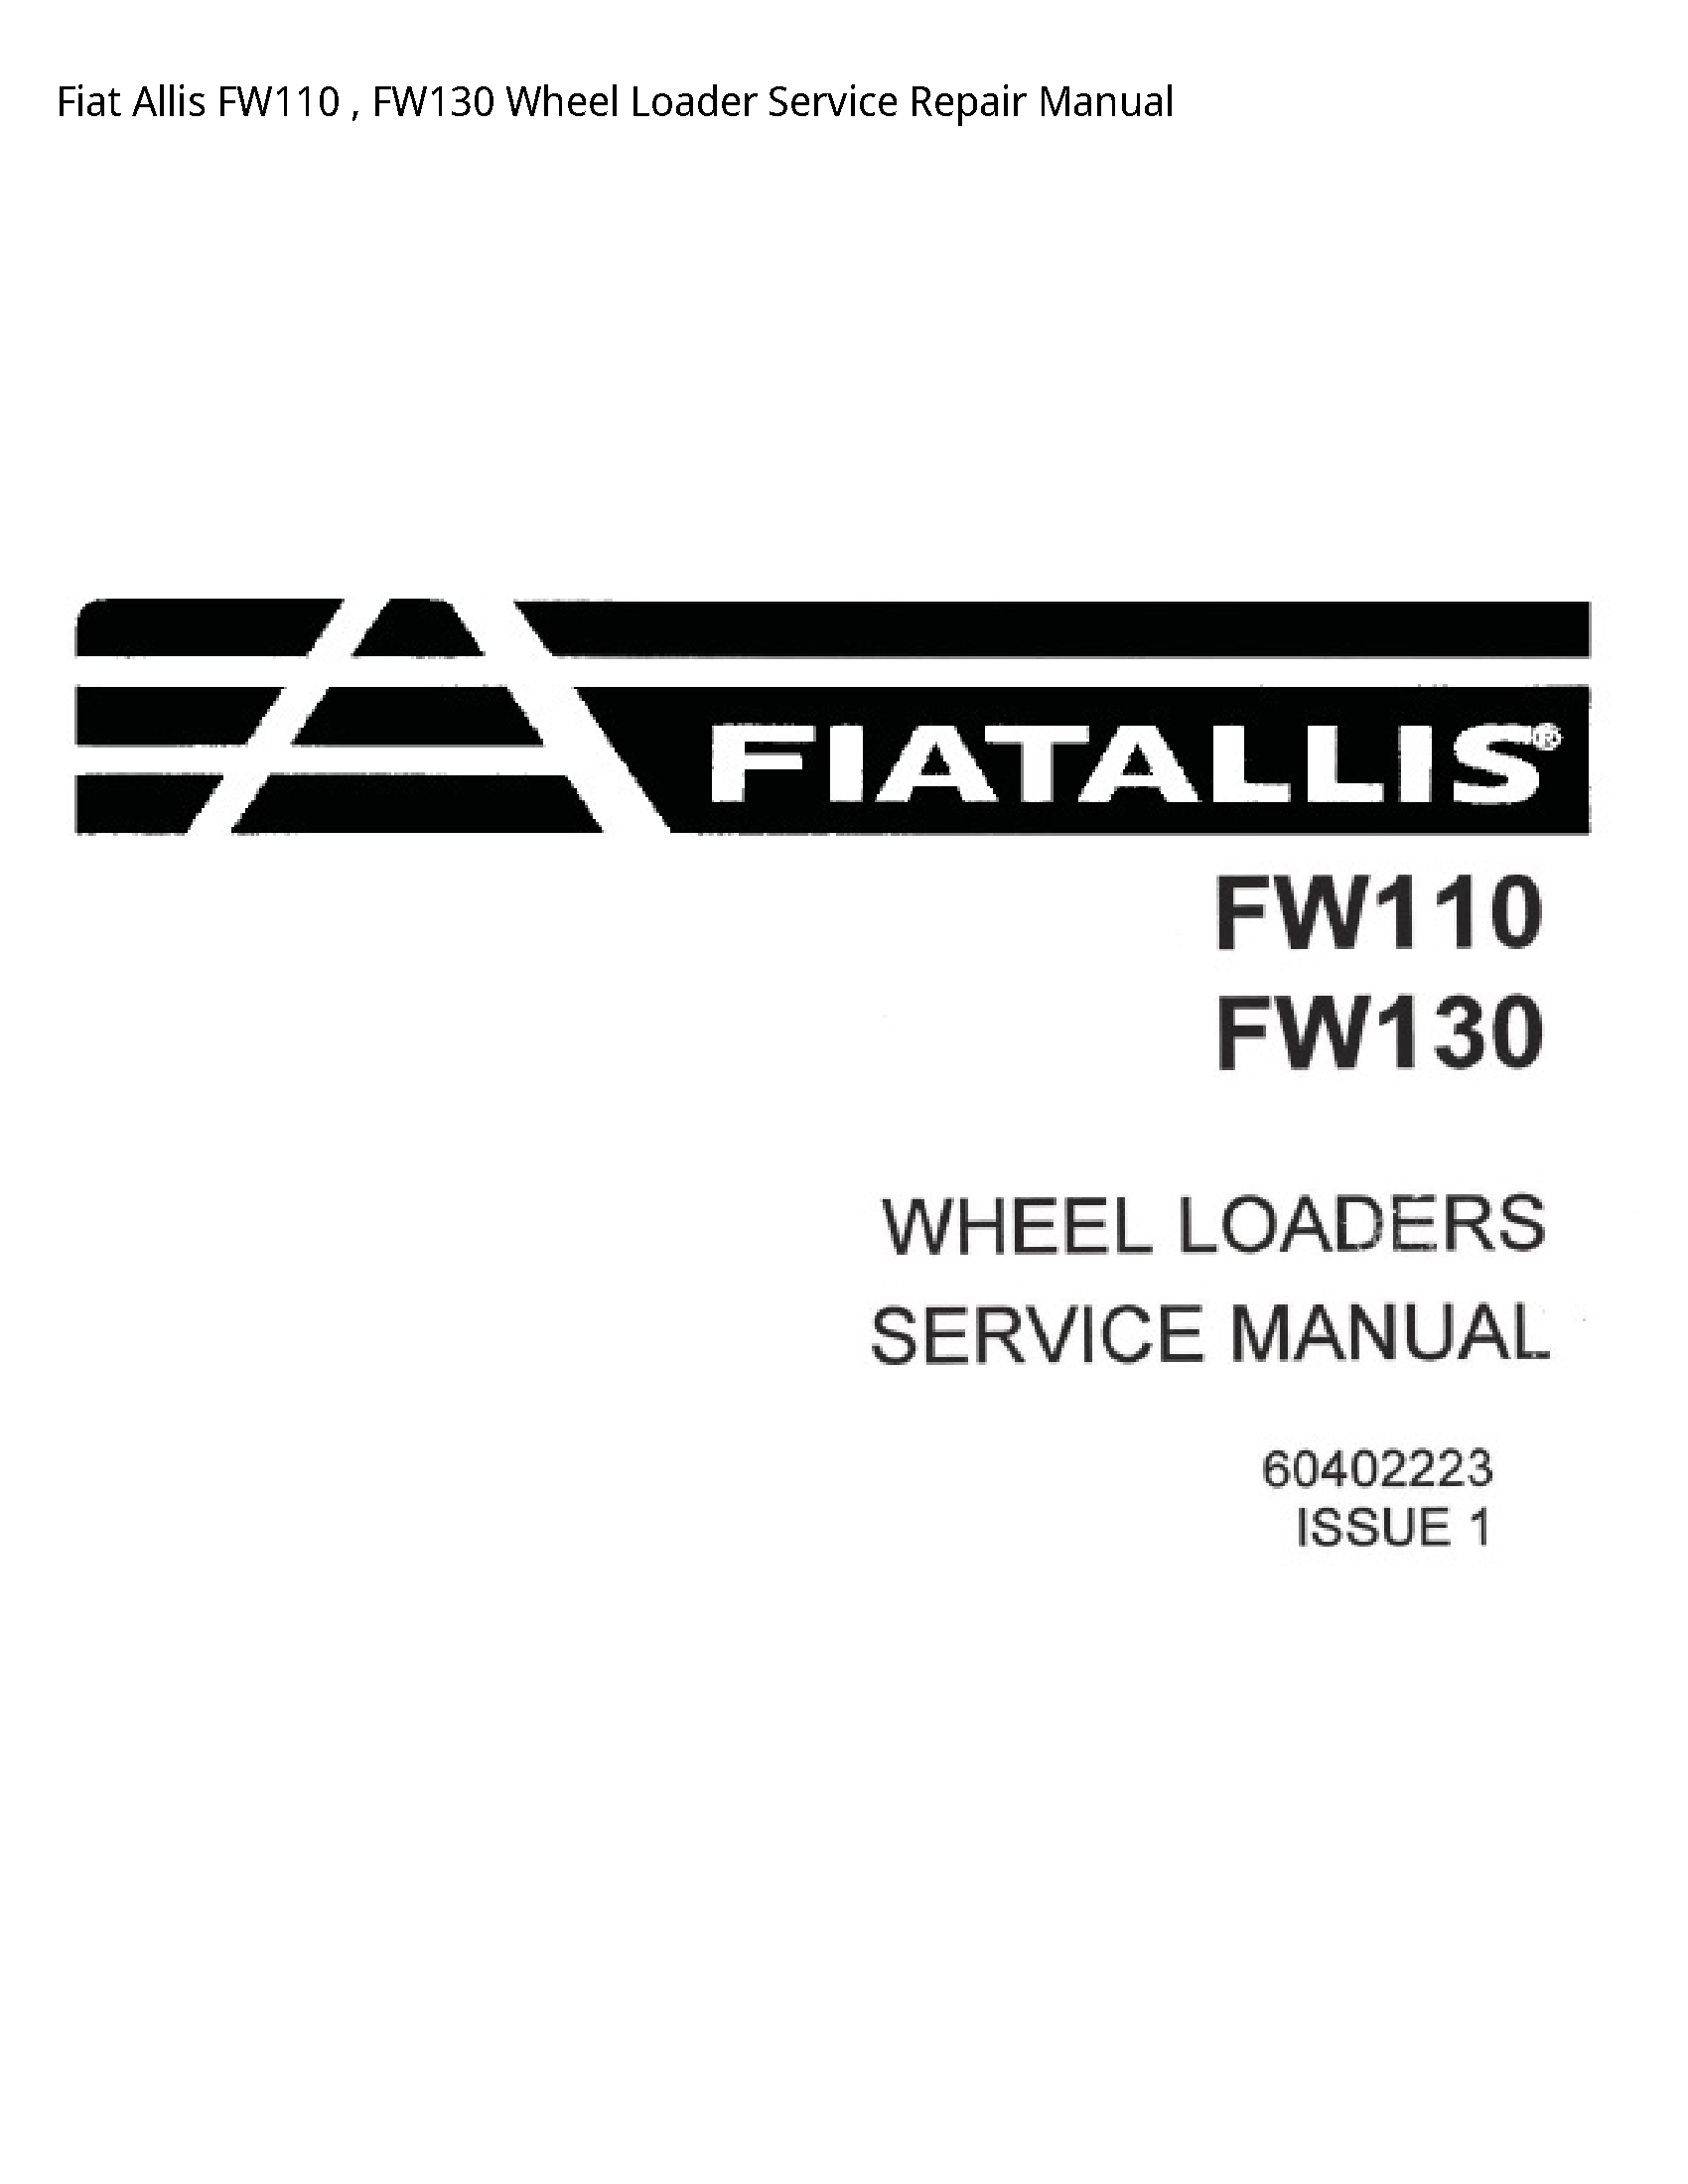 Fiat Allis FW110 Wheel Loader manual